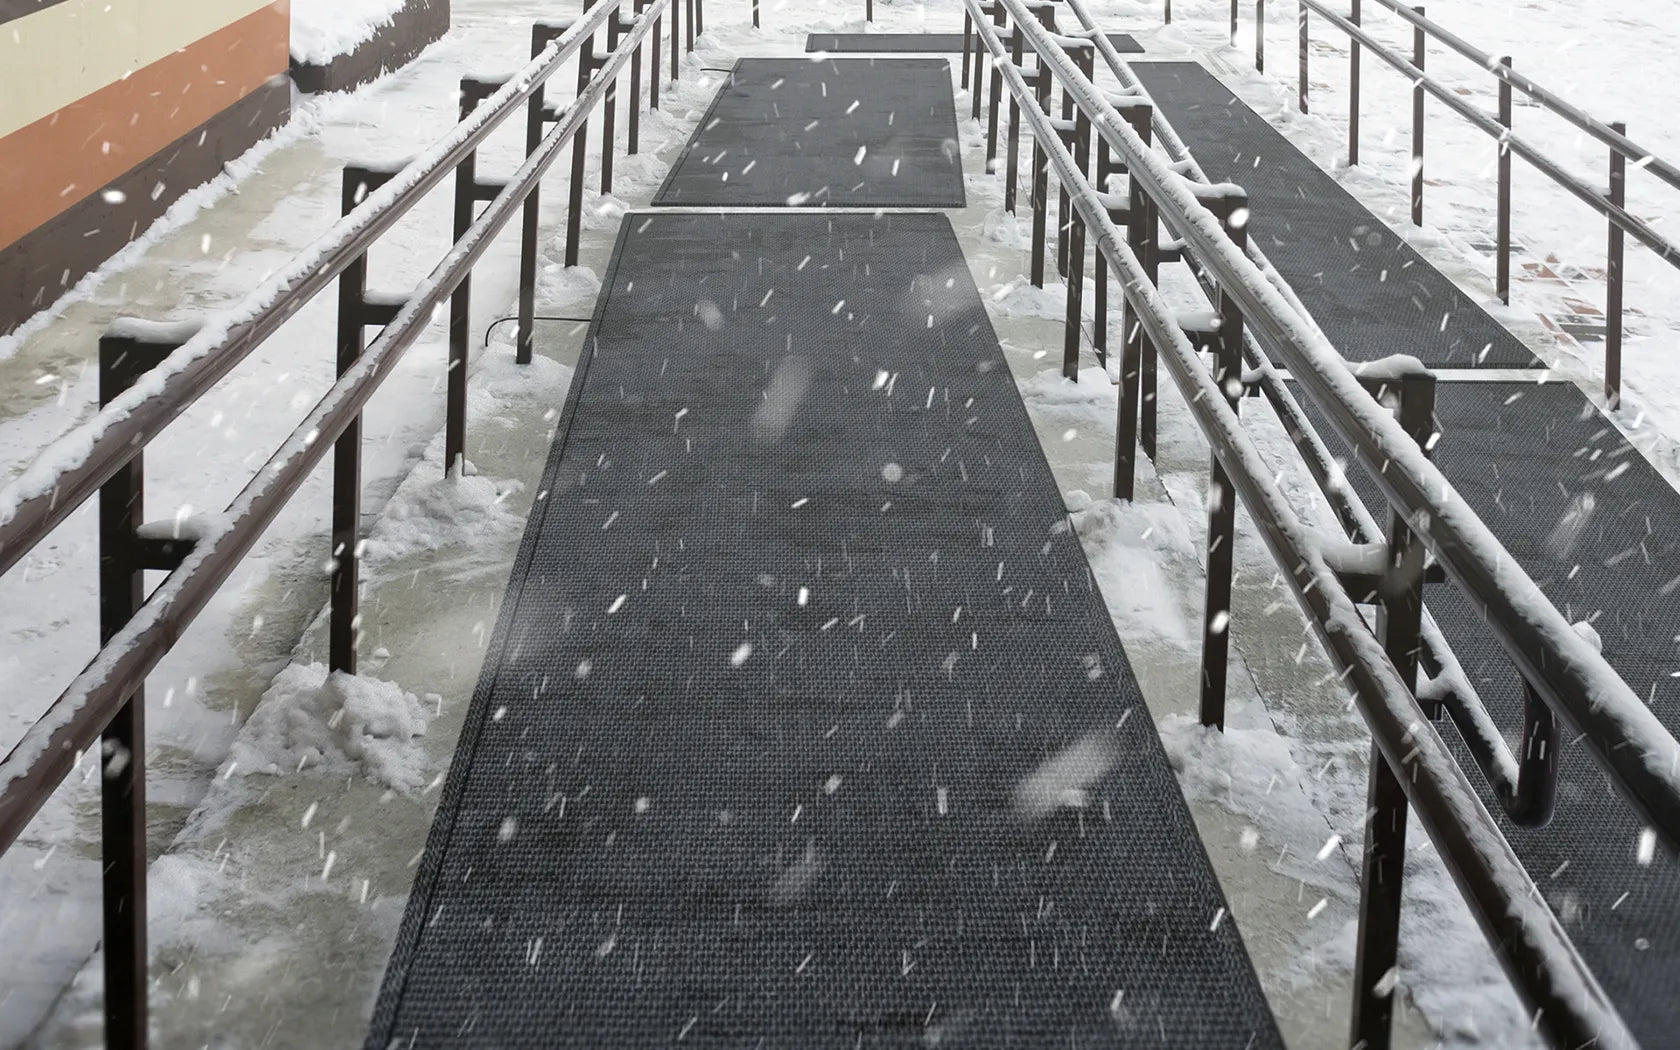 HeatTrak Pro snow melting walkway mats on a commercial property